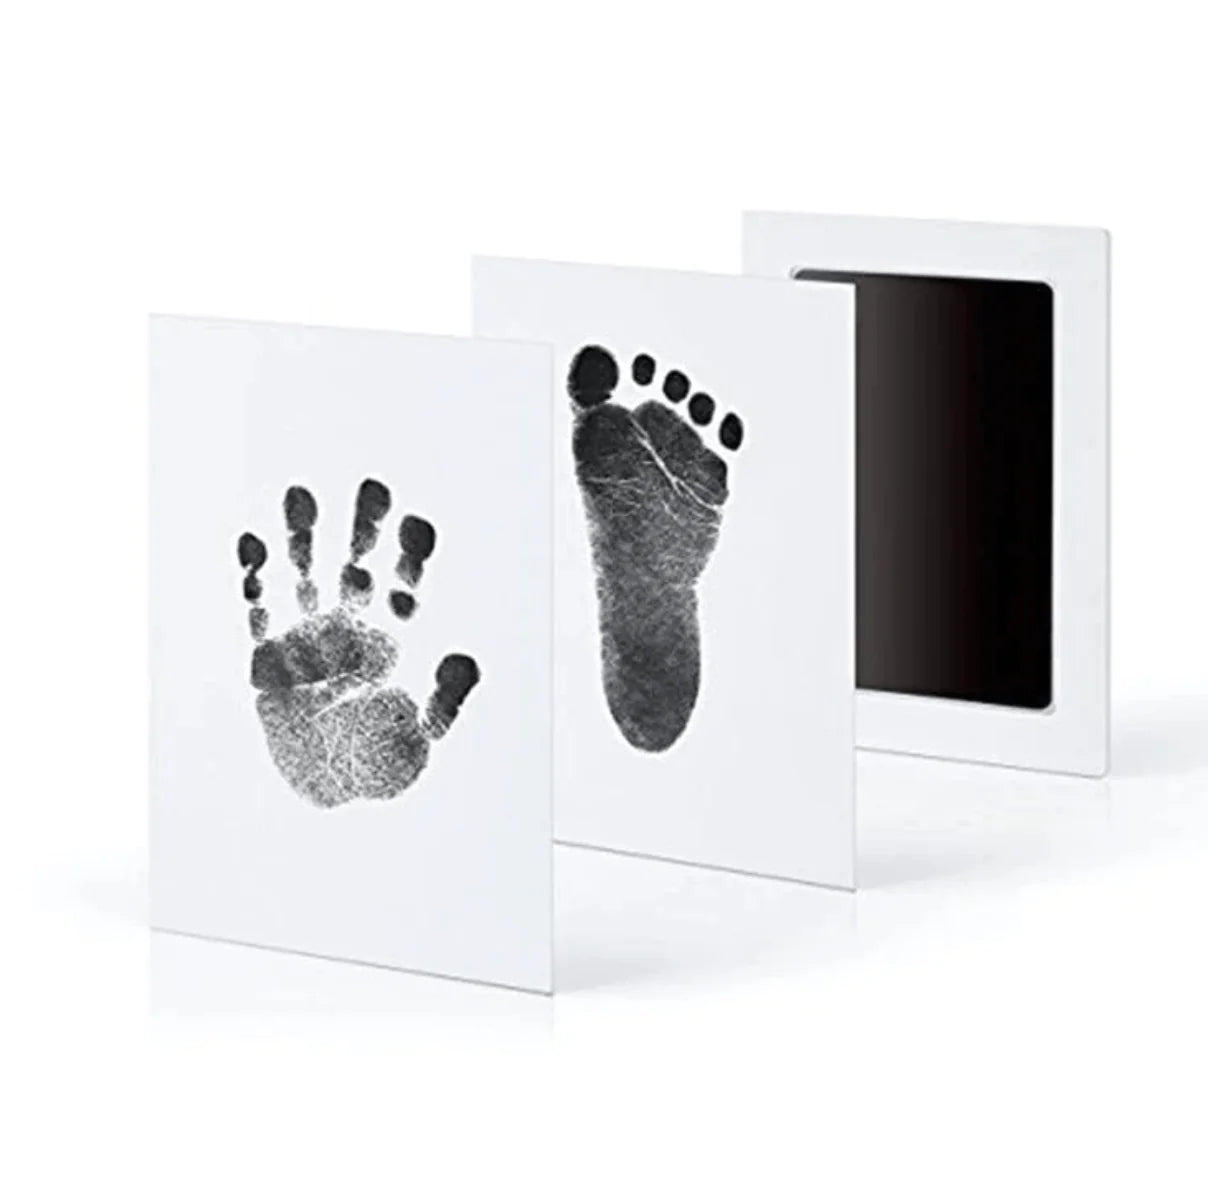 LivelyLil' One™ Baby Footprint Kit